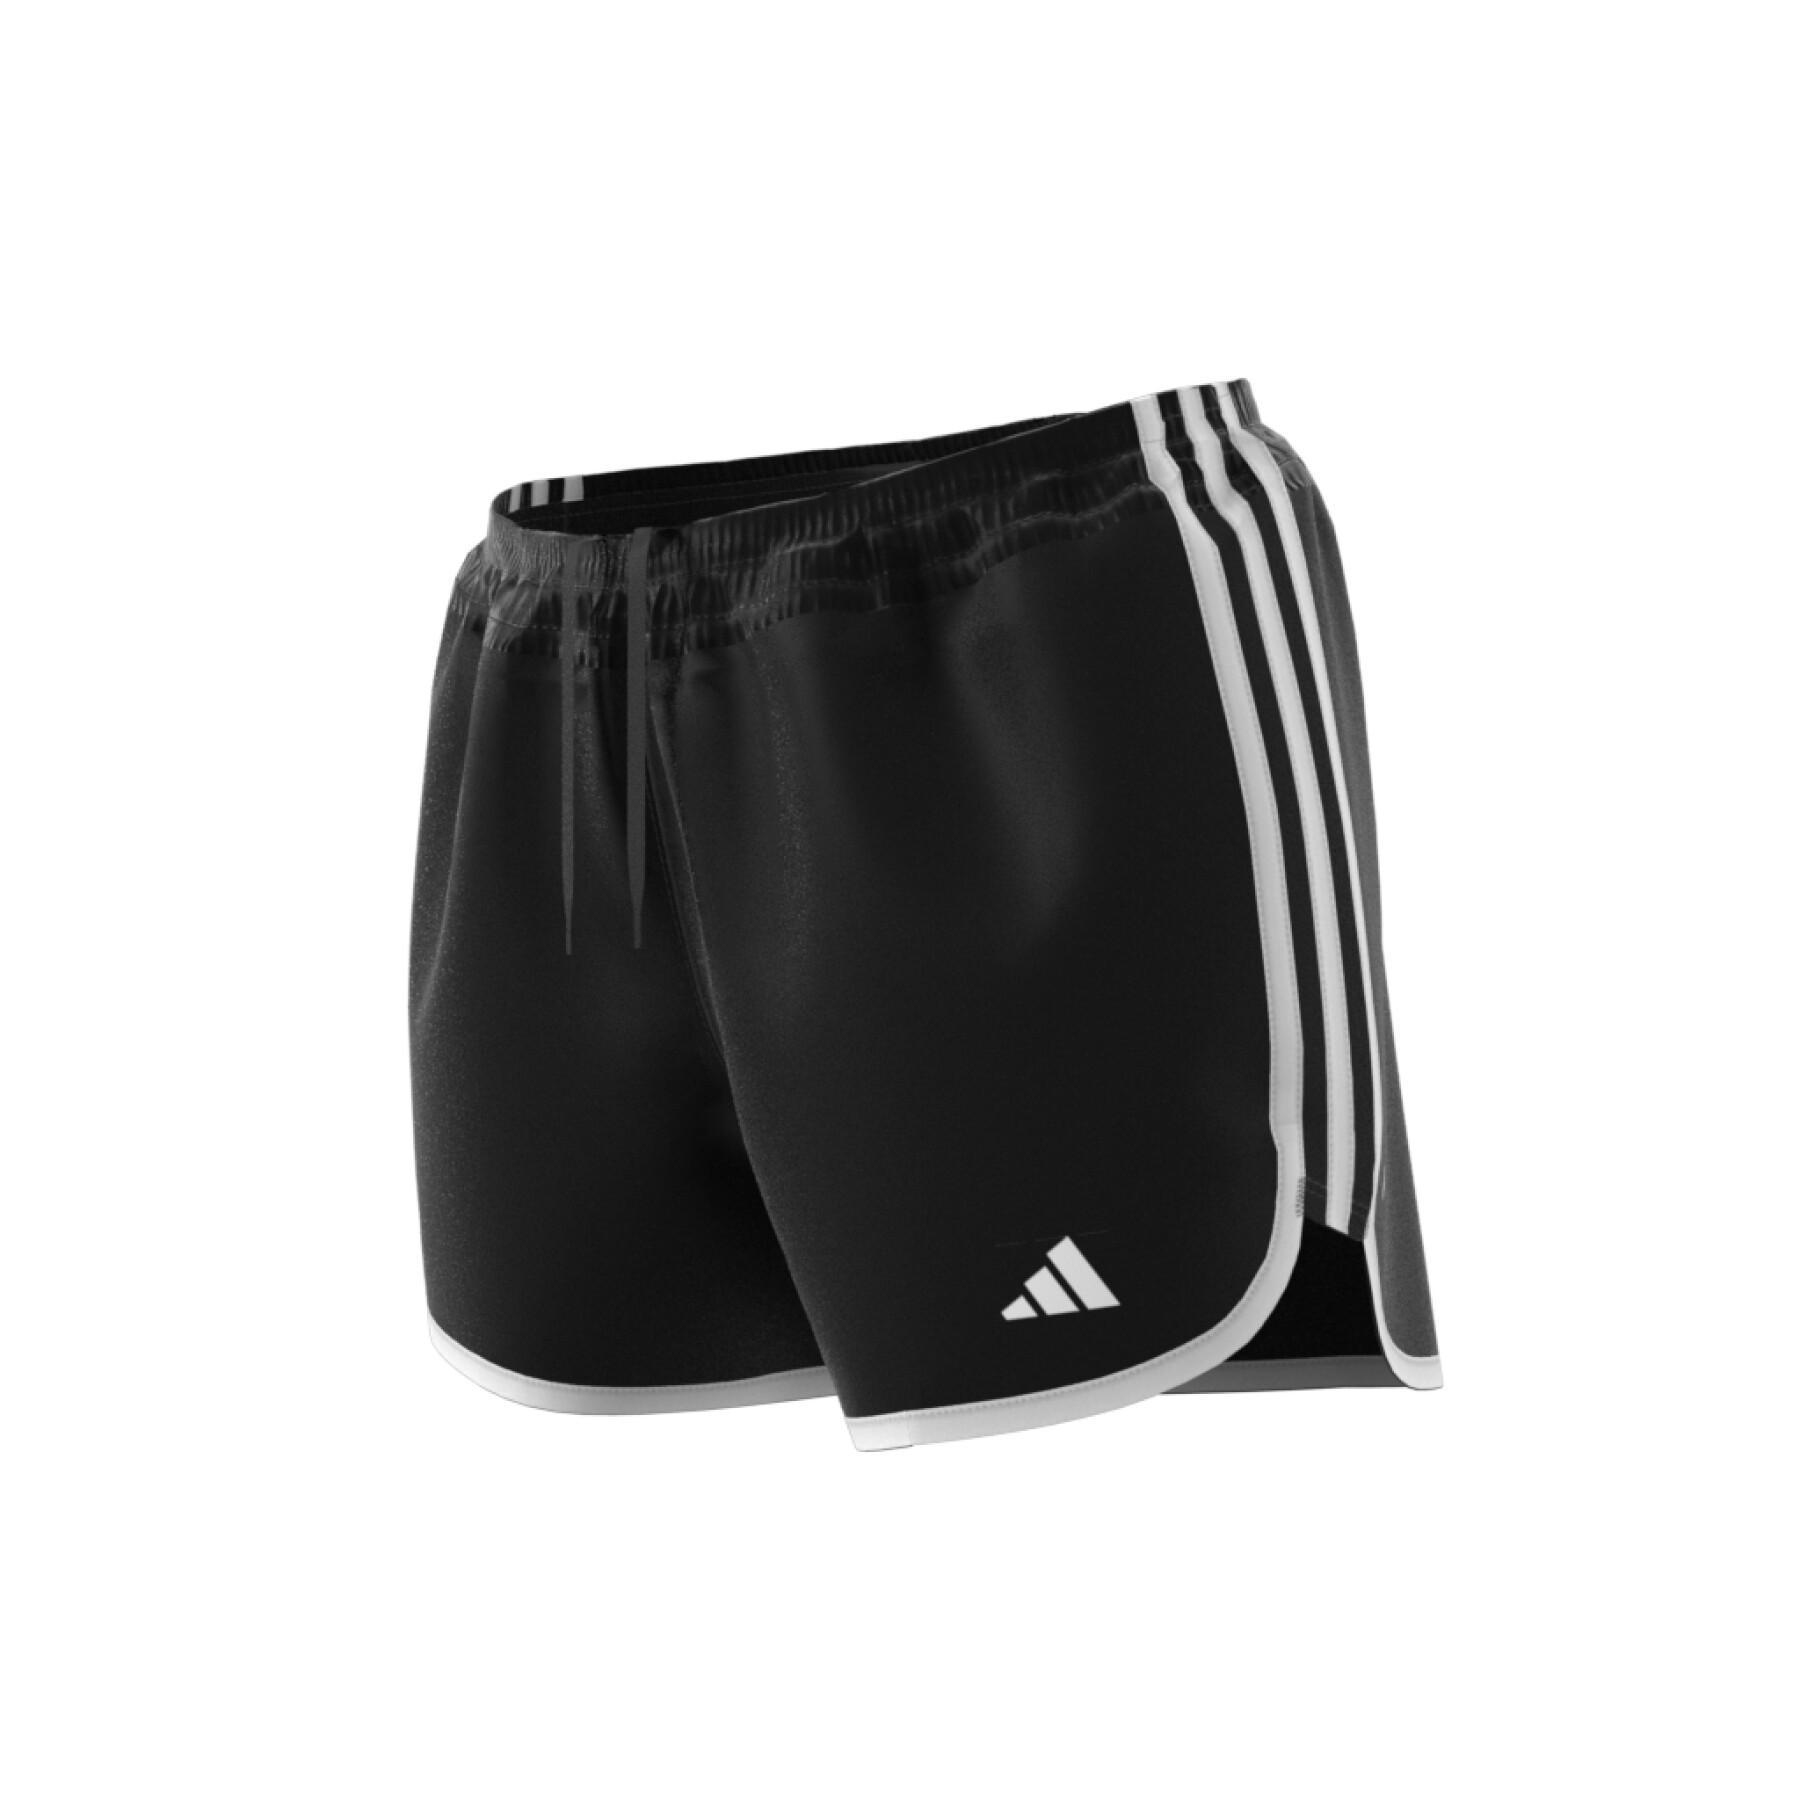 Women's shorts adidas Marathon 20 - adidas - Brands - Handball wear